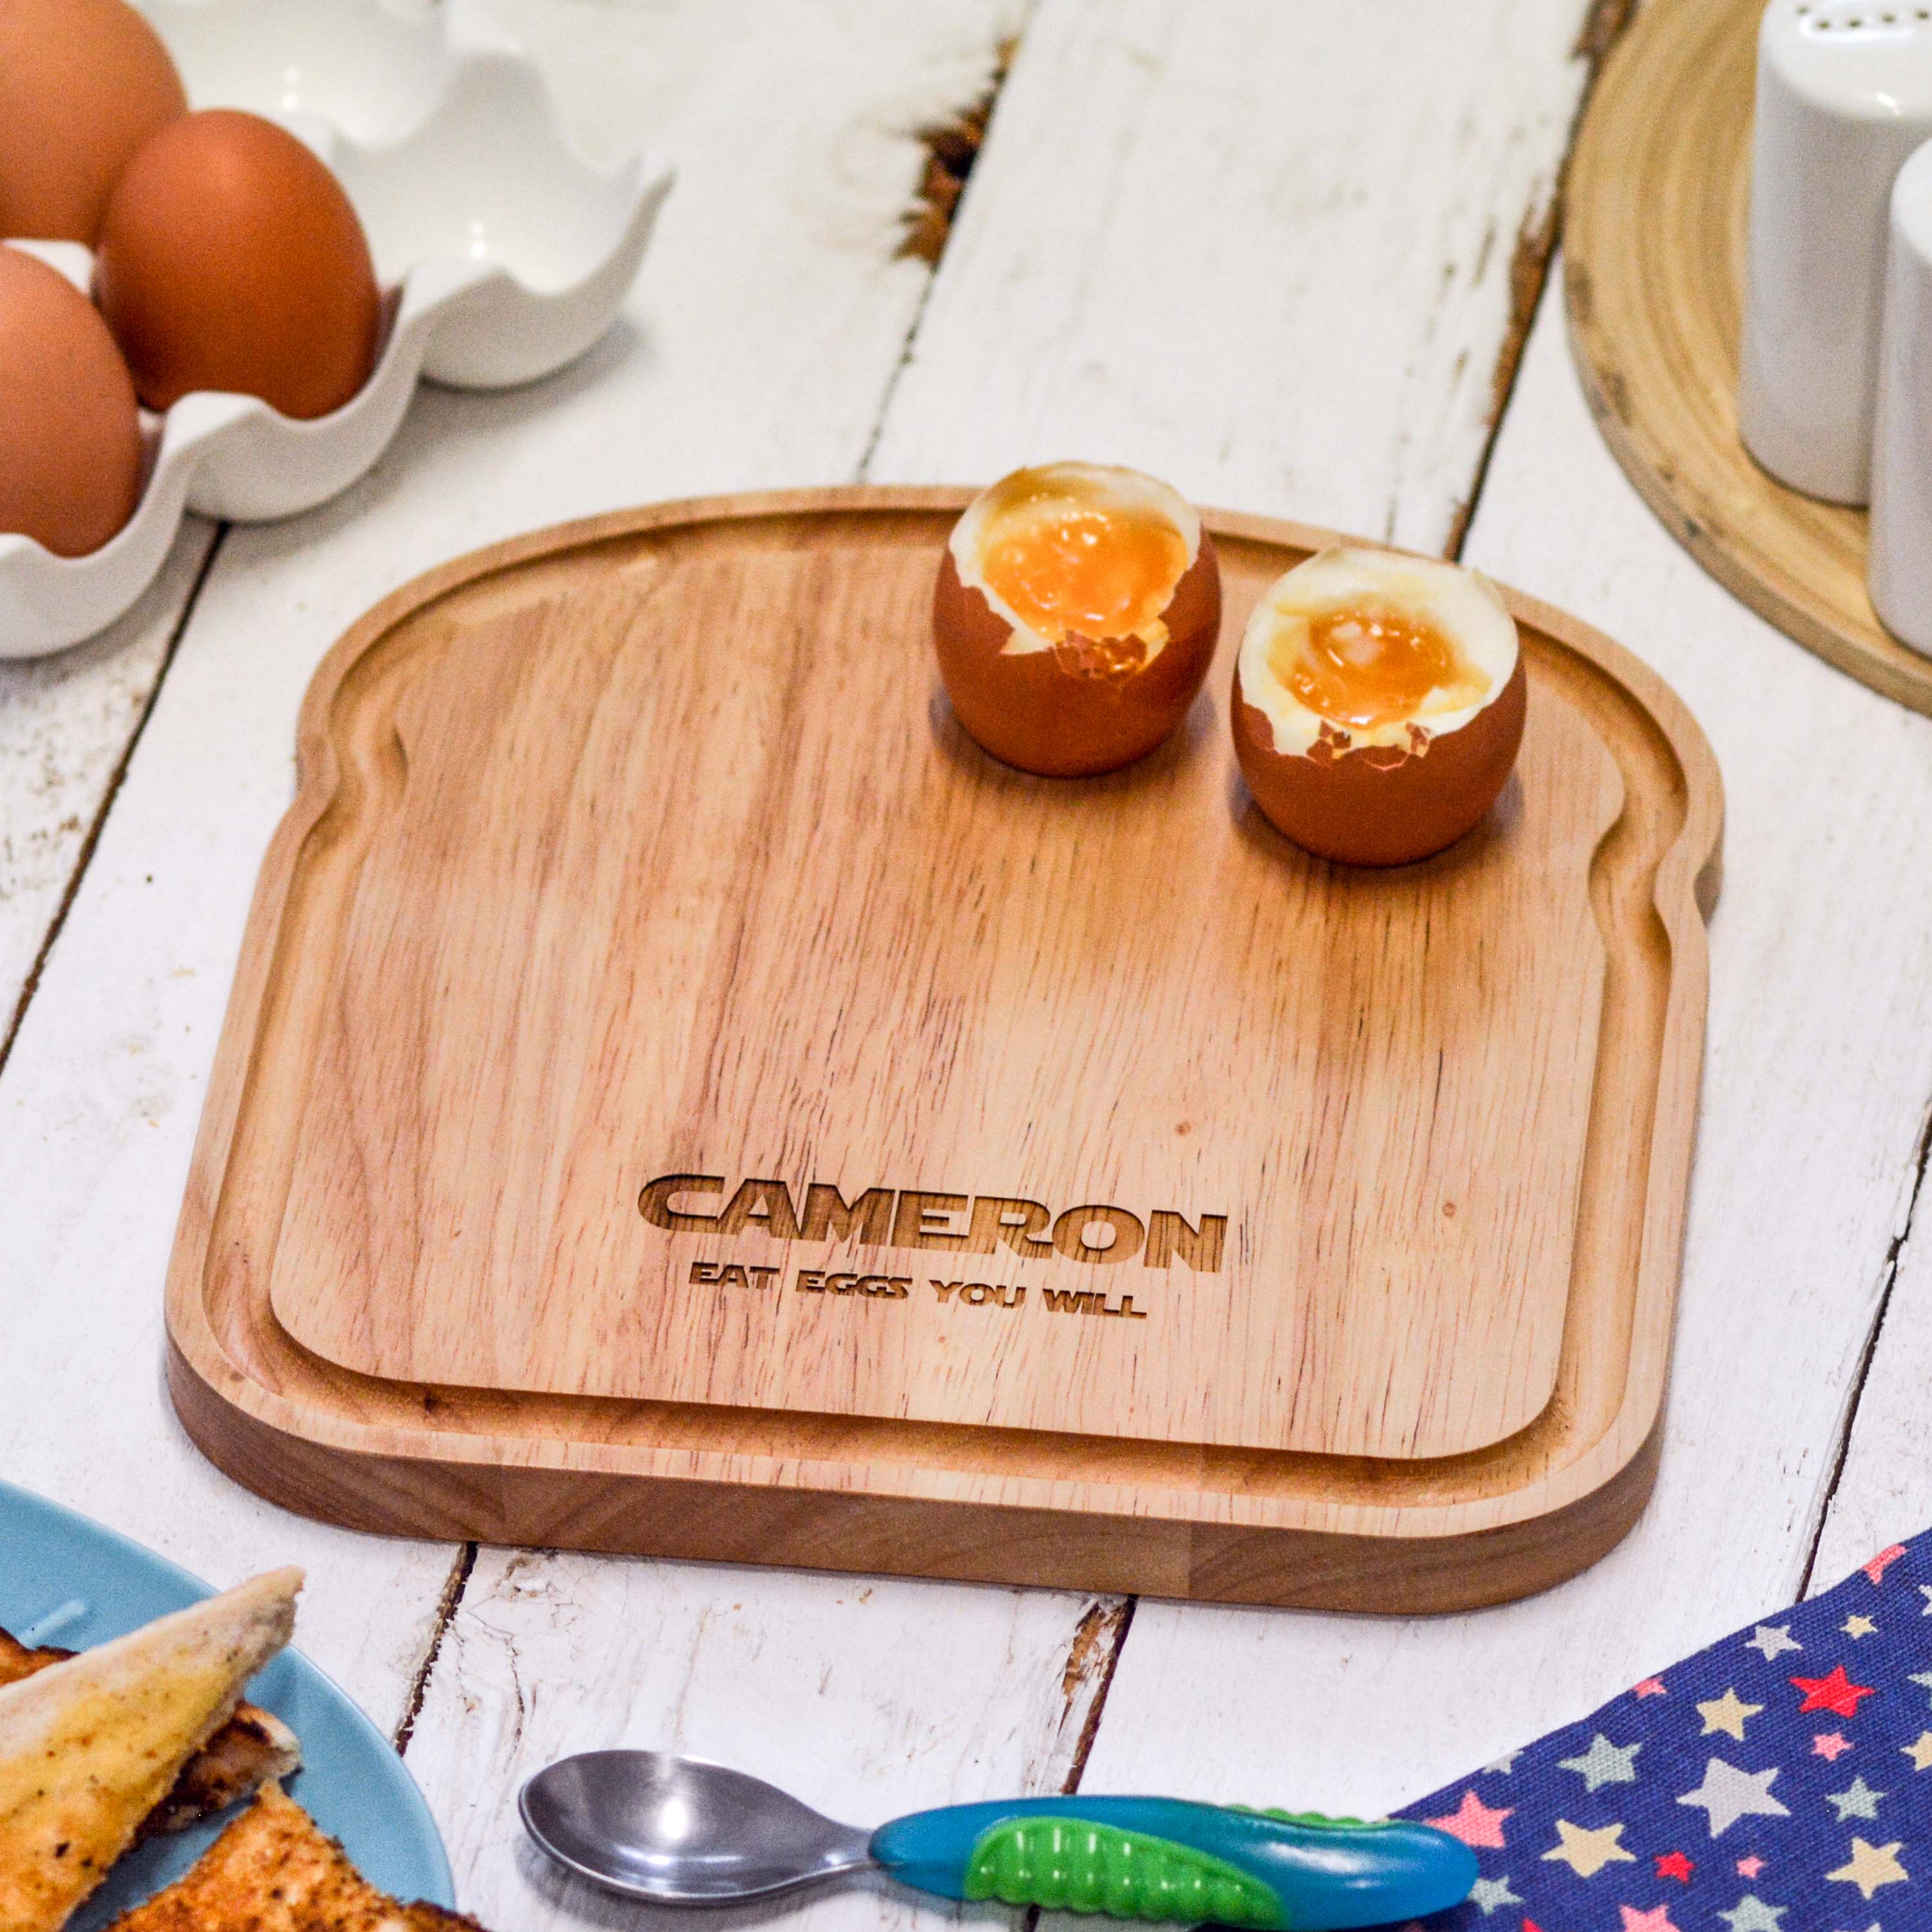 Personalised Breakfast Egg Wooden Board – Eat eggs you will